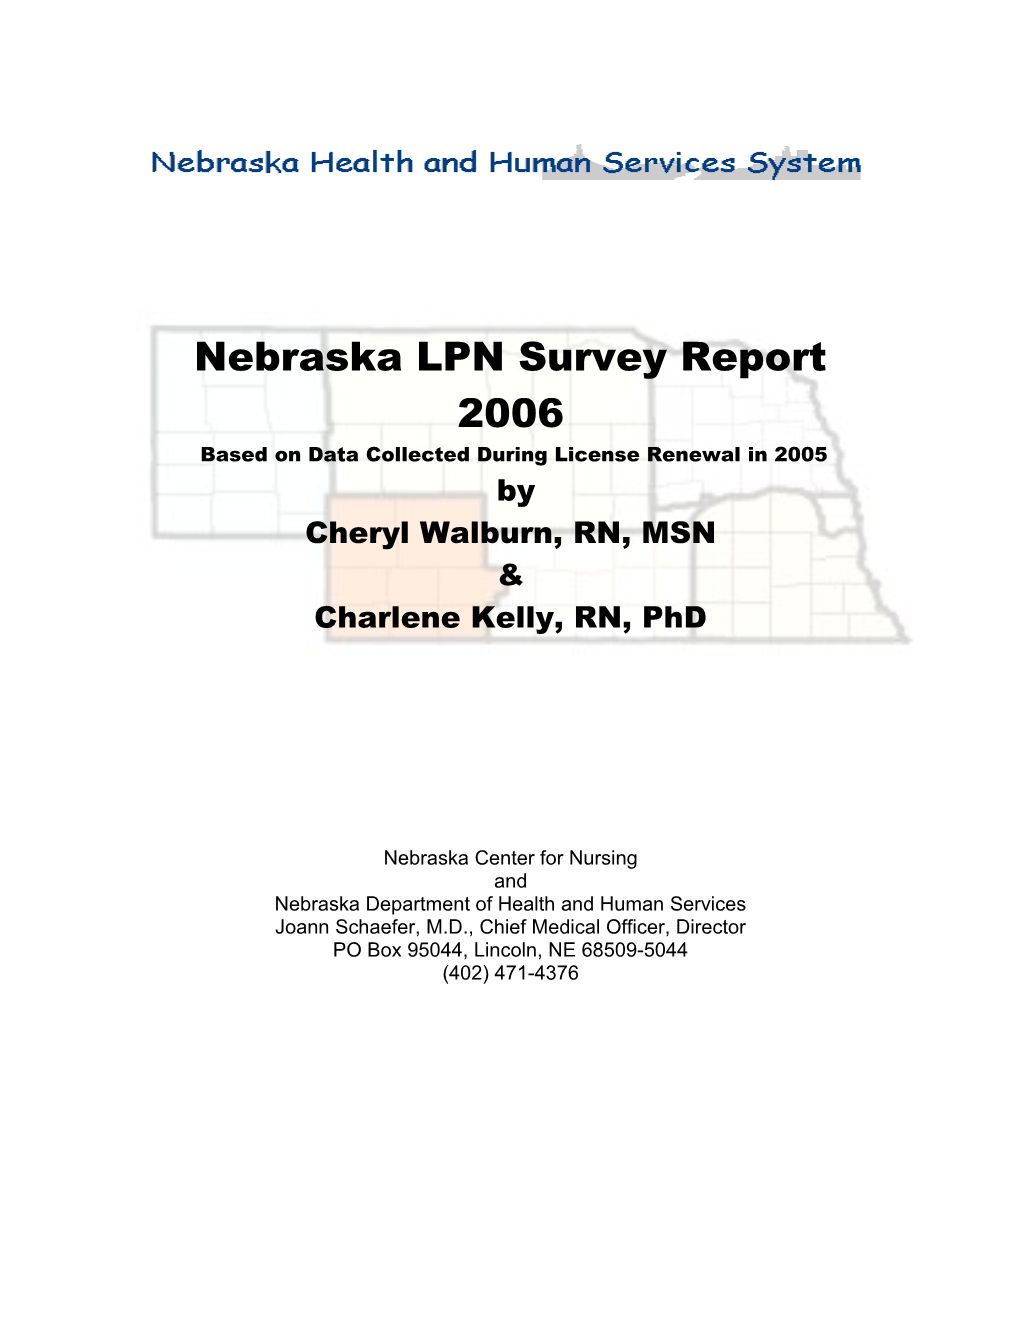 Nebraska LPN Survey Report